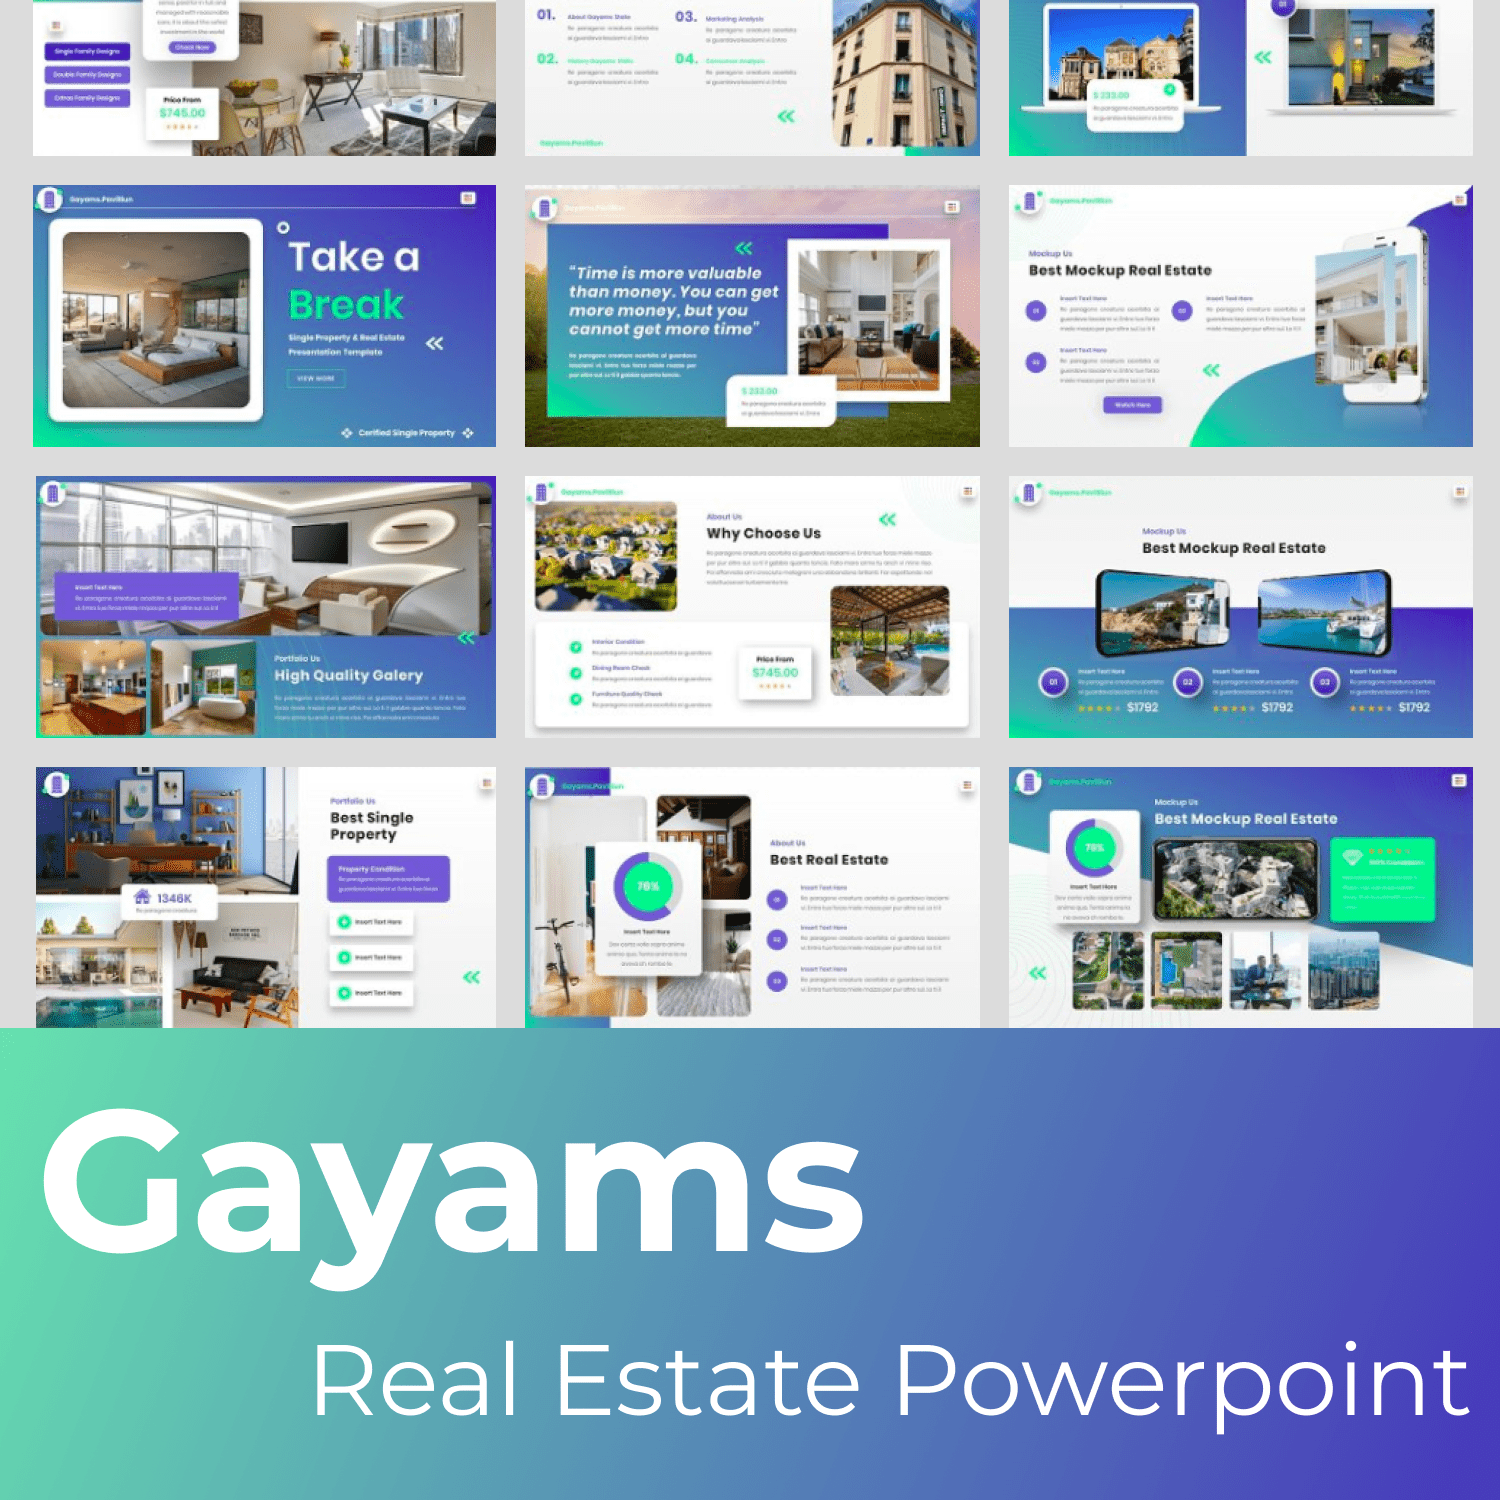 Gayams - Real Estate Powerpoint main cover.